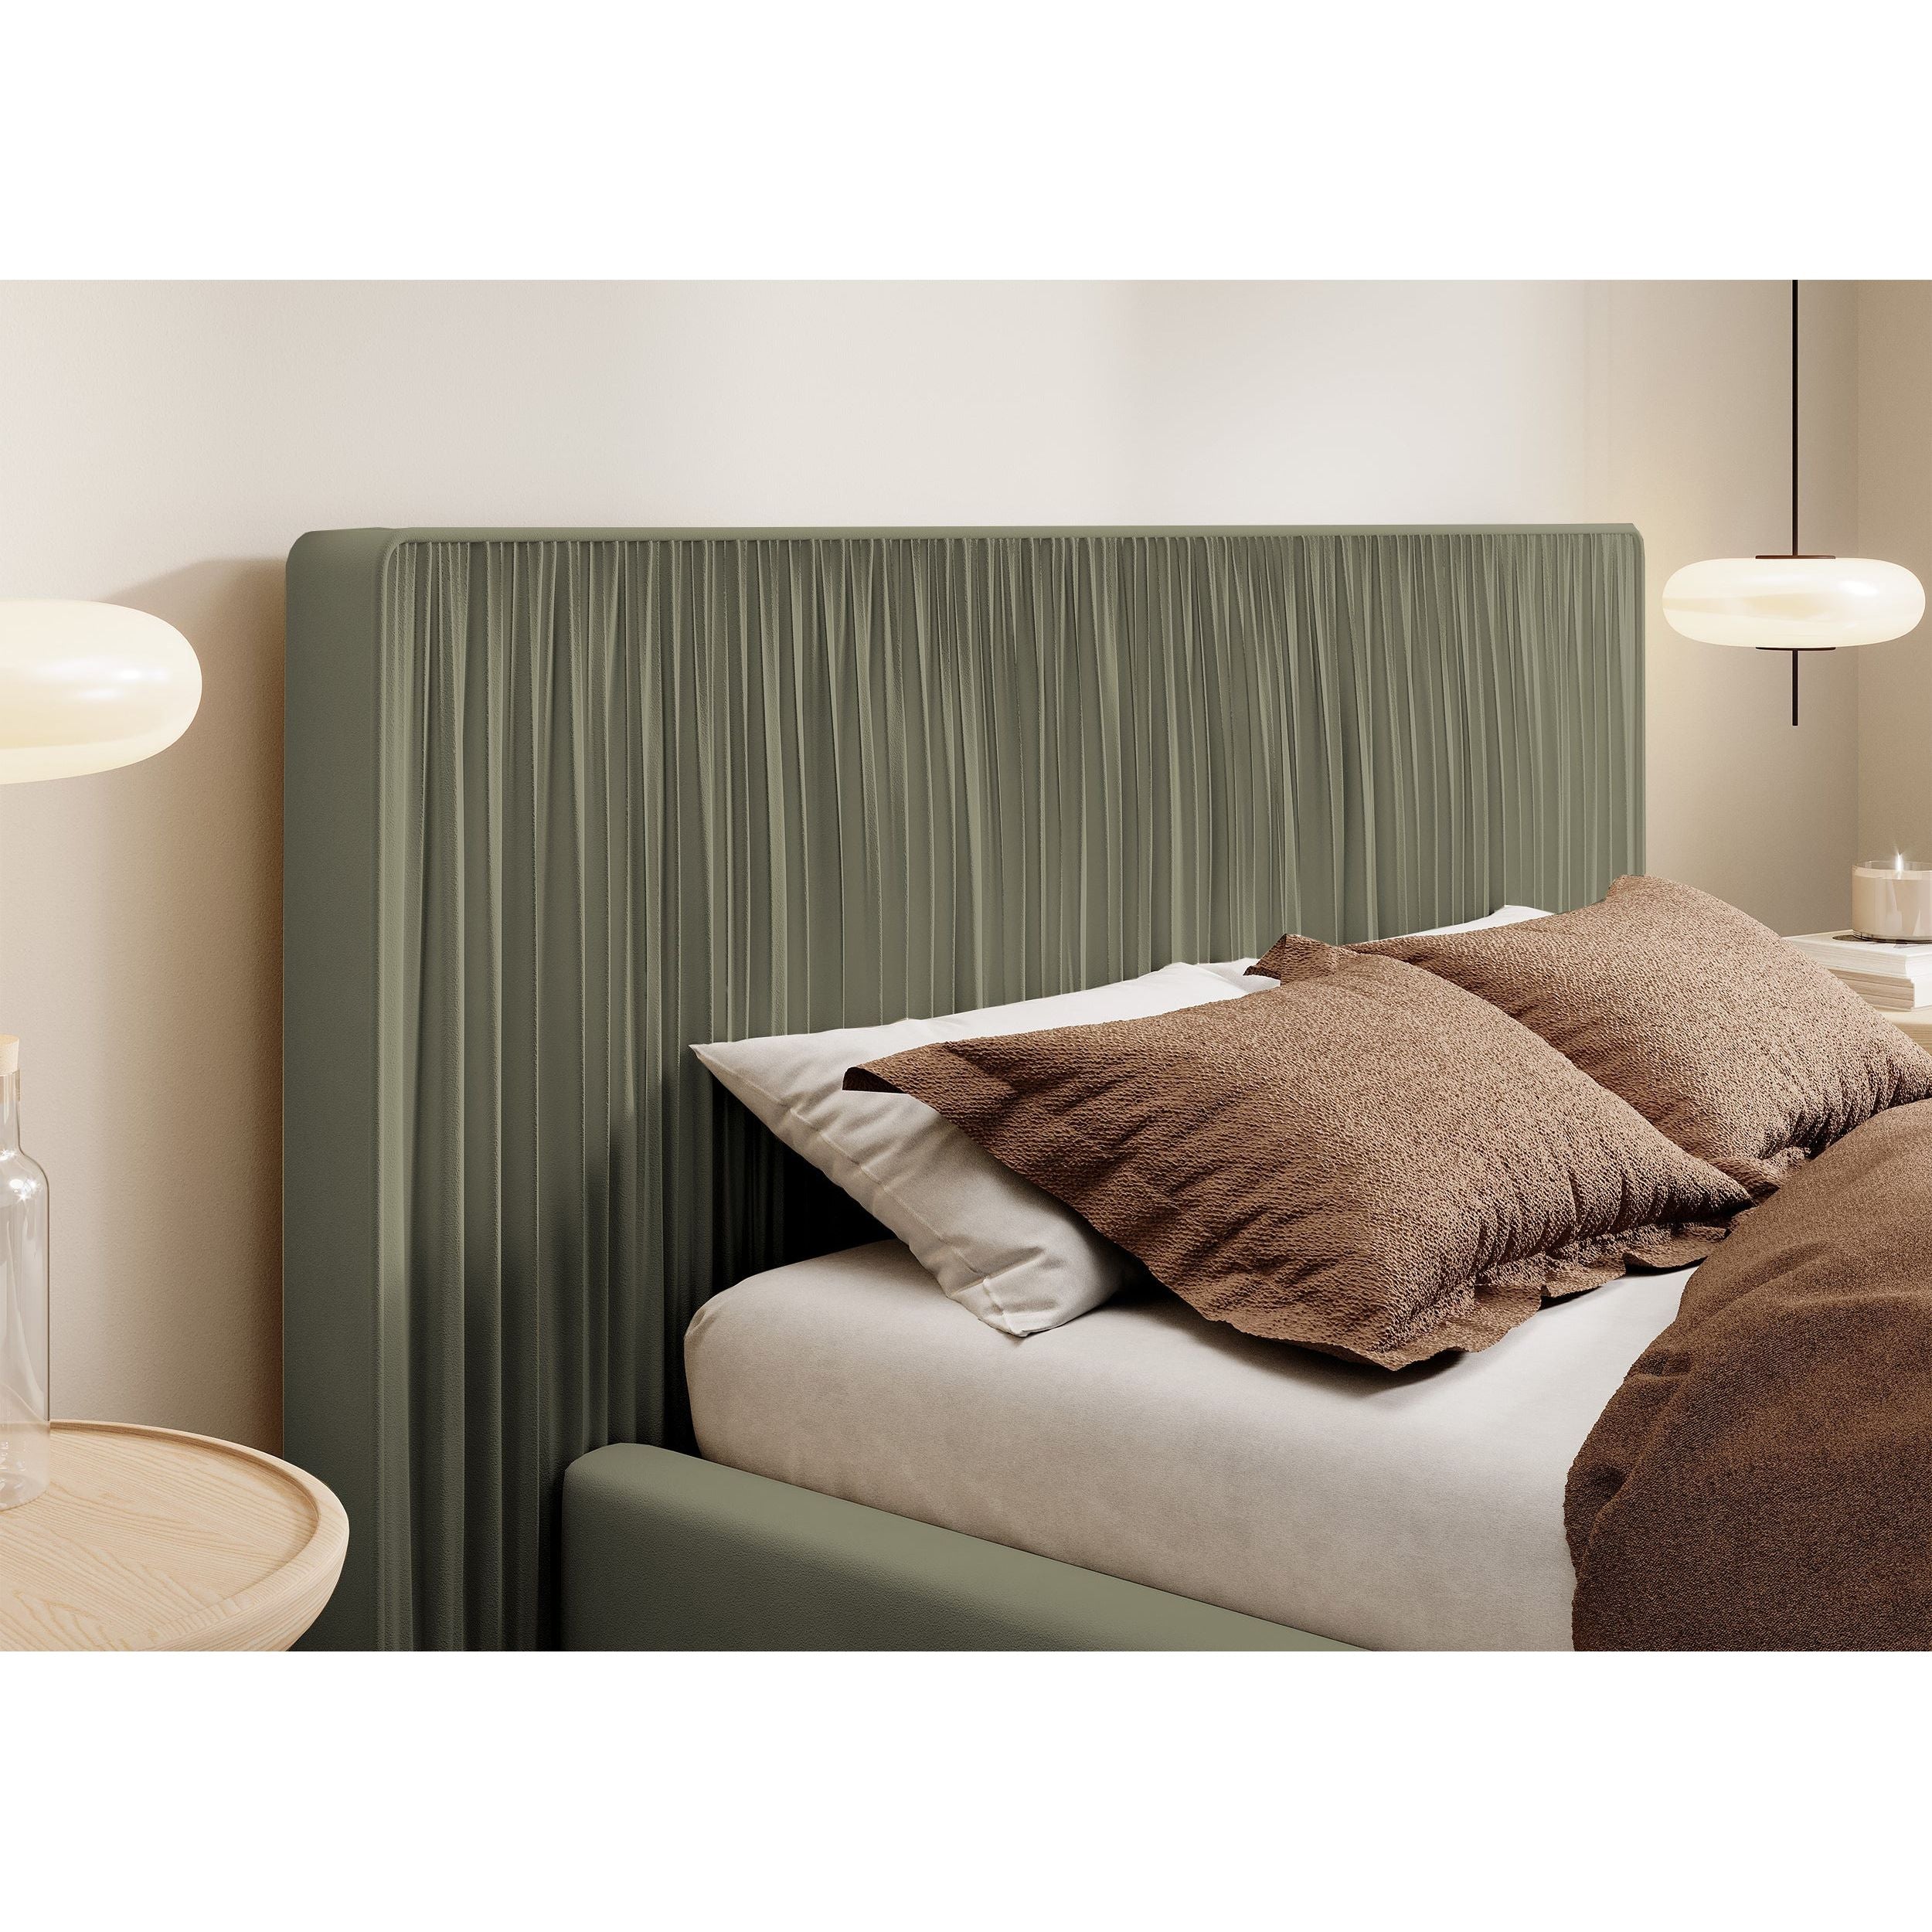 Minkšta lova 180x200 cm TAILE, alyvuogių spalva, su patalynės dėže